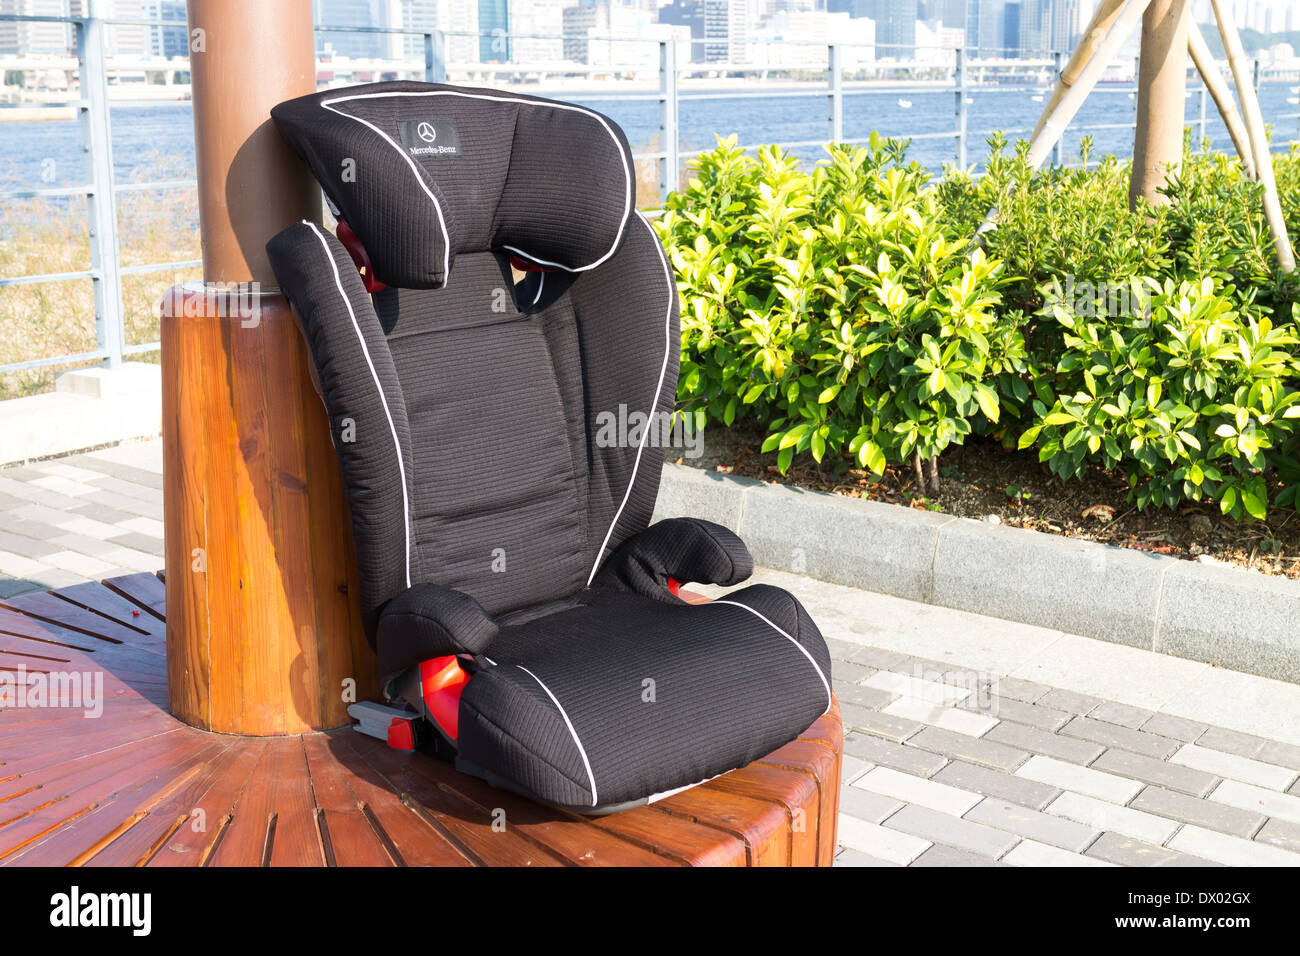 Mercedes-Benz Kindersitz für Auto Stockfotografie - Alamy